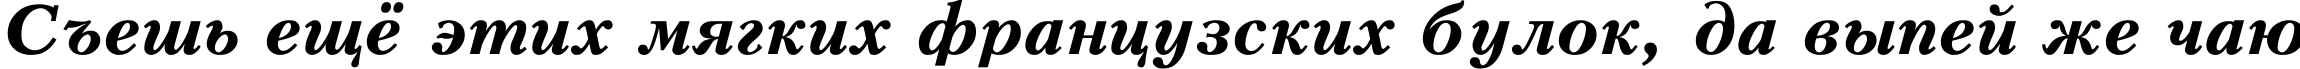 Пример написания шрифтом Peterburg Bold Italic текста на русском